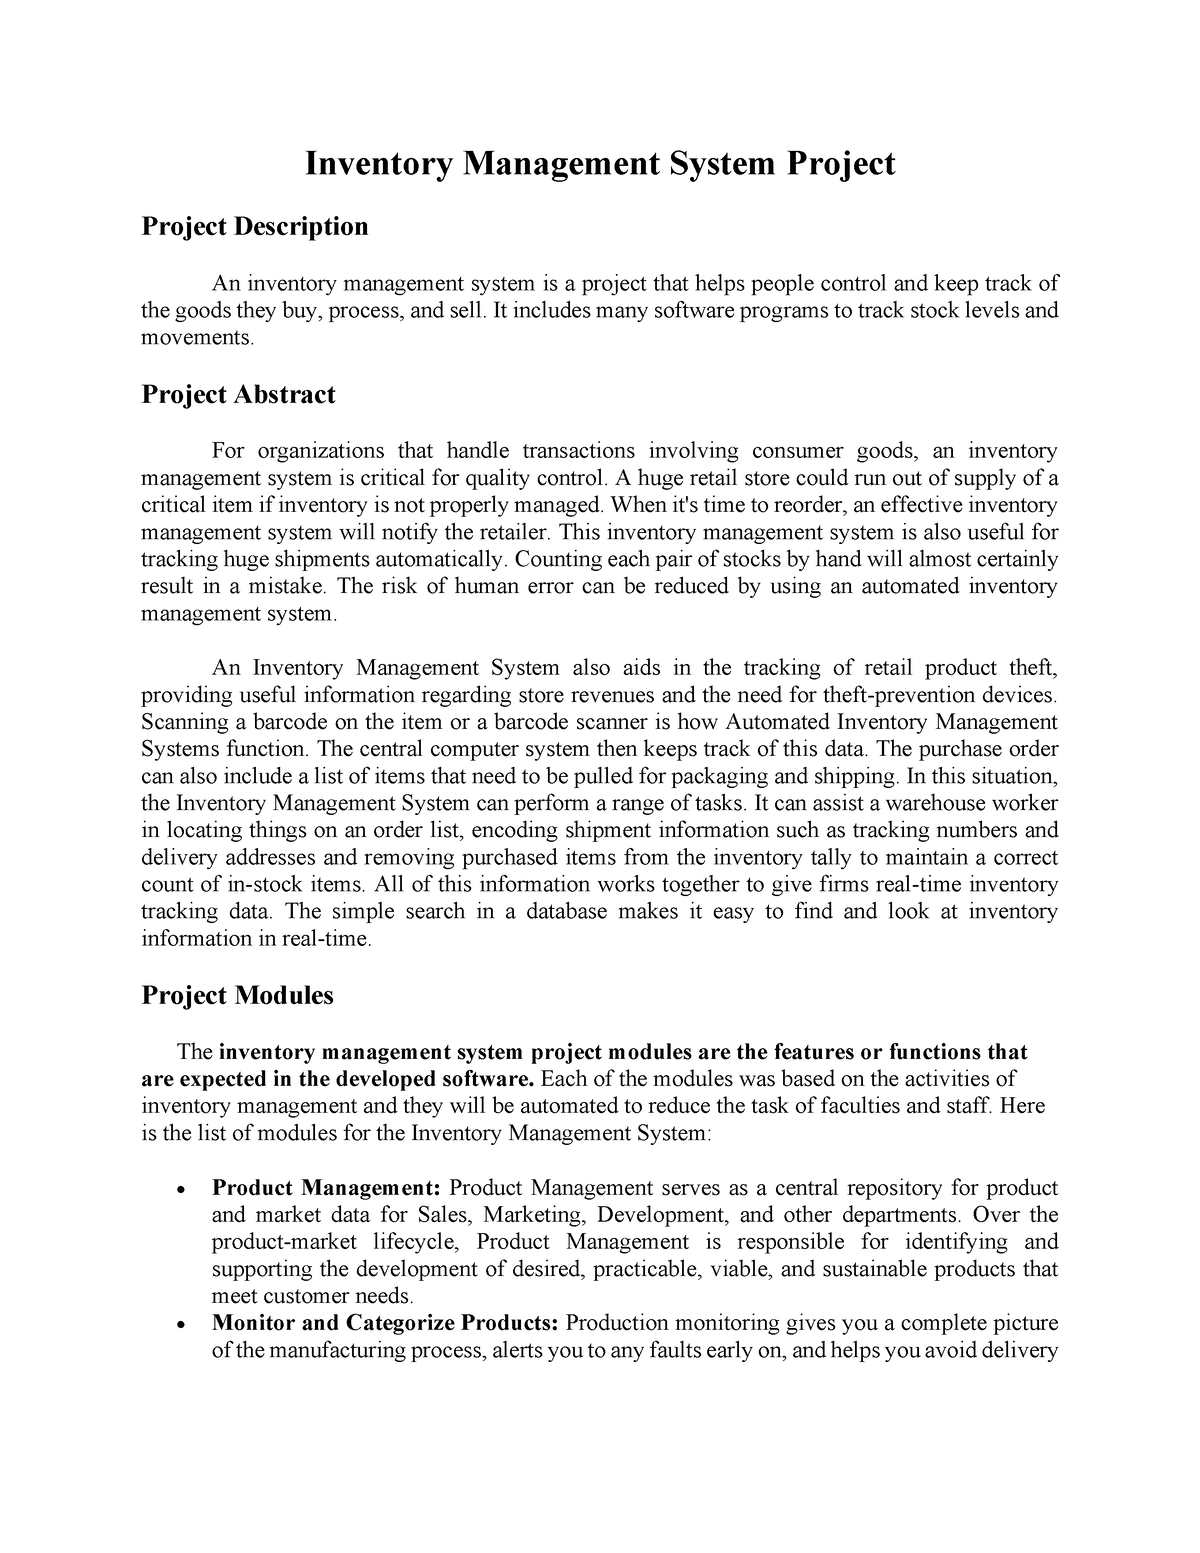 inventory management dissertation pdf